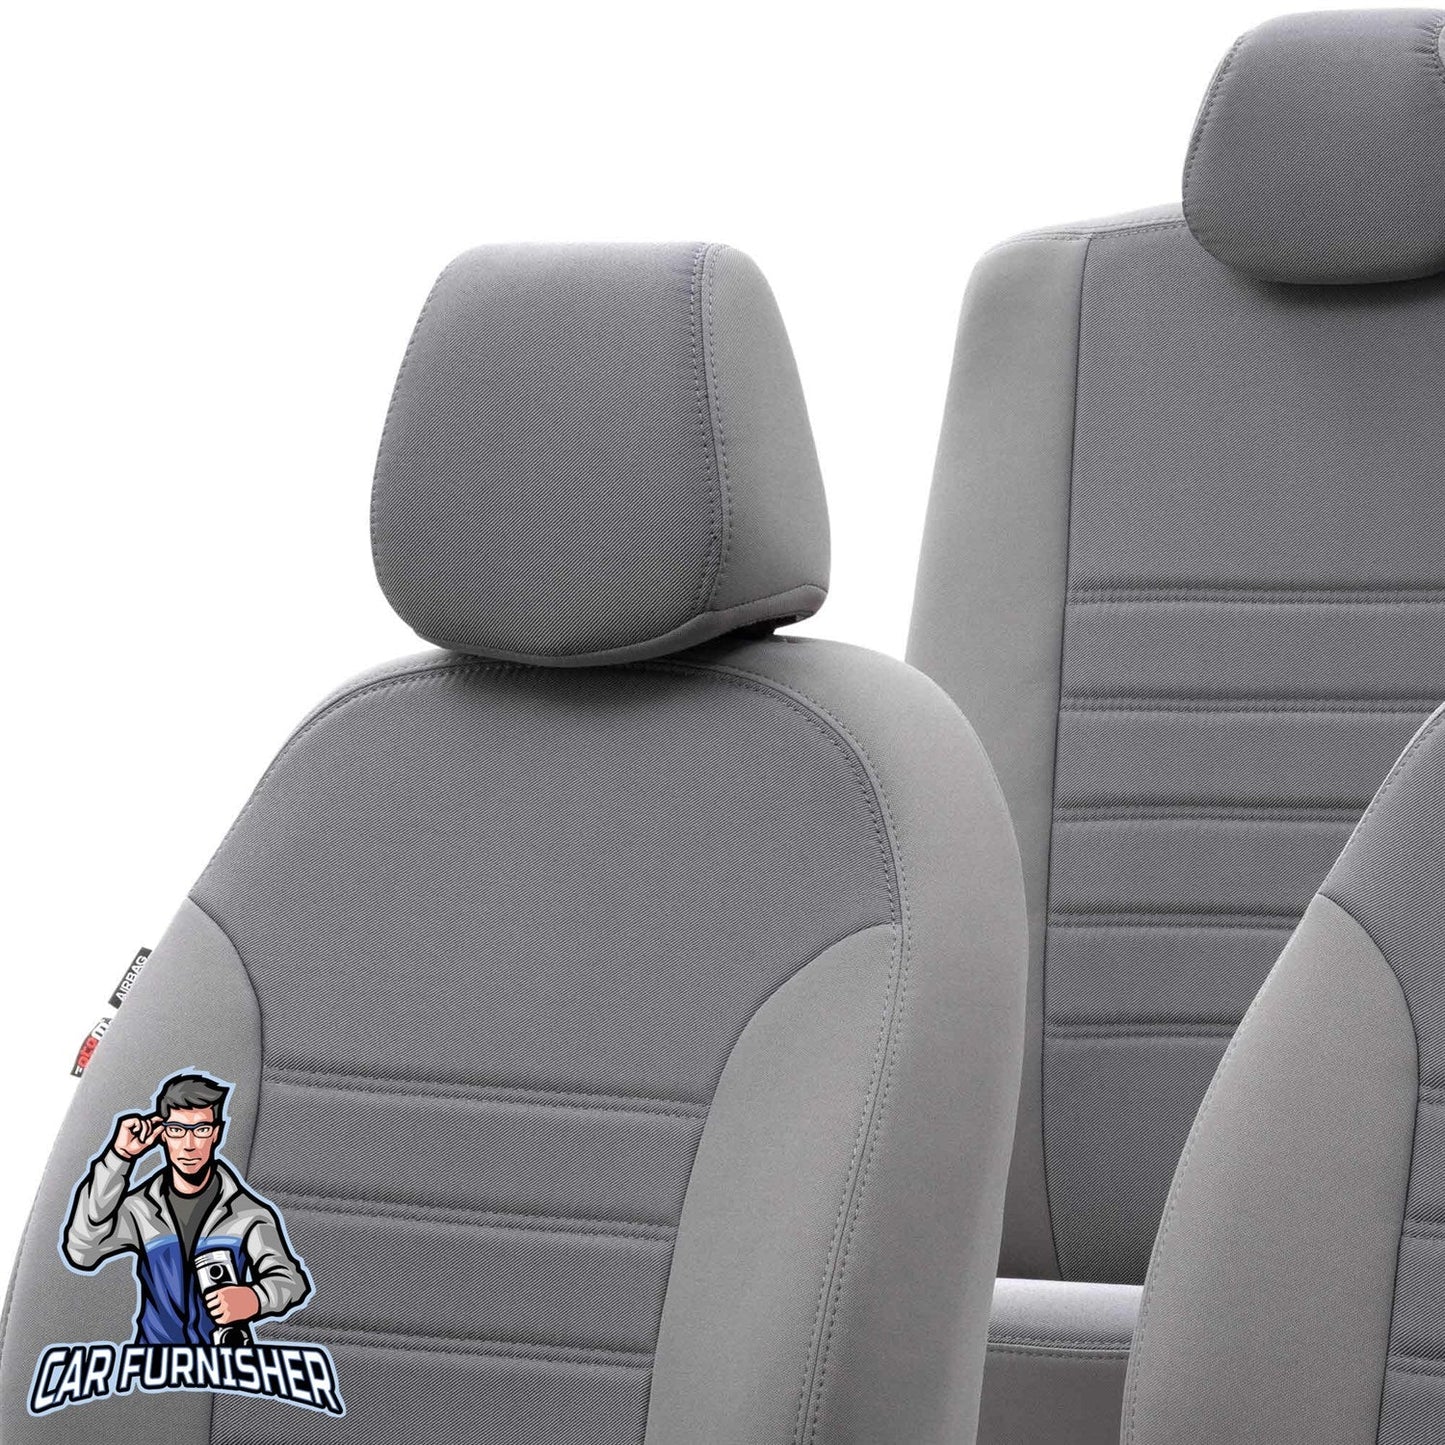 Volkswagen Crafter Seat Cover Original Jacquard Design Dark Beige Jacquard Fabric